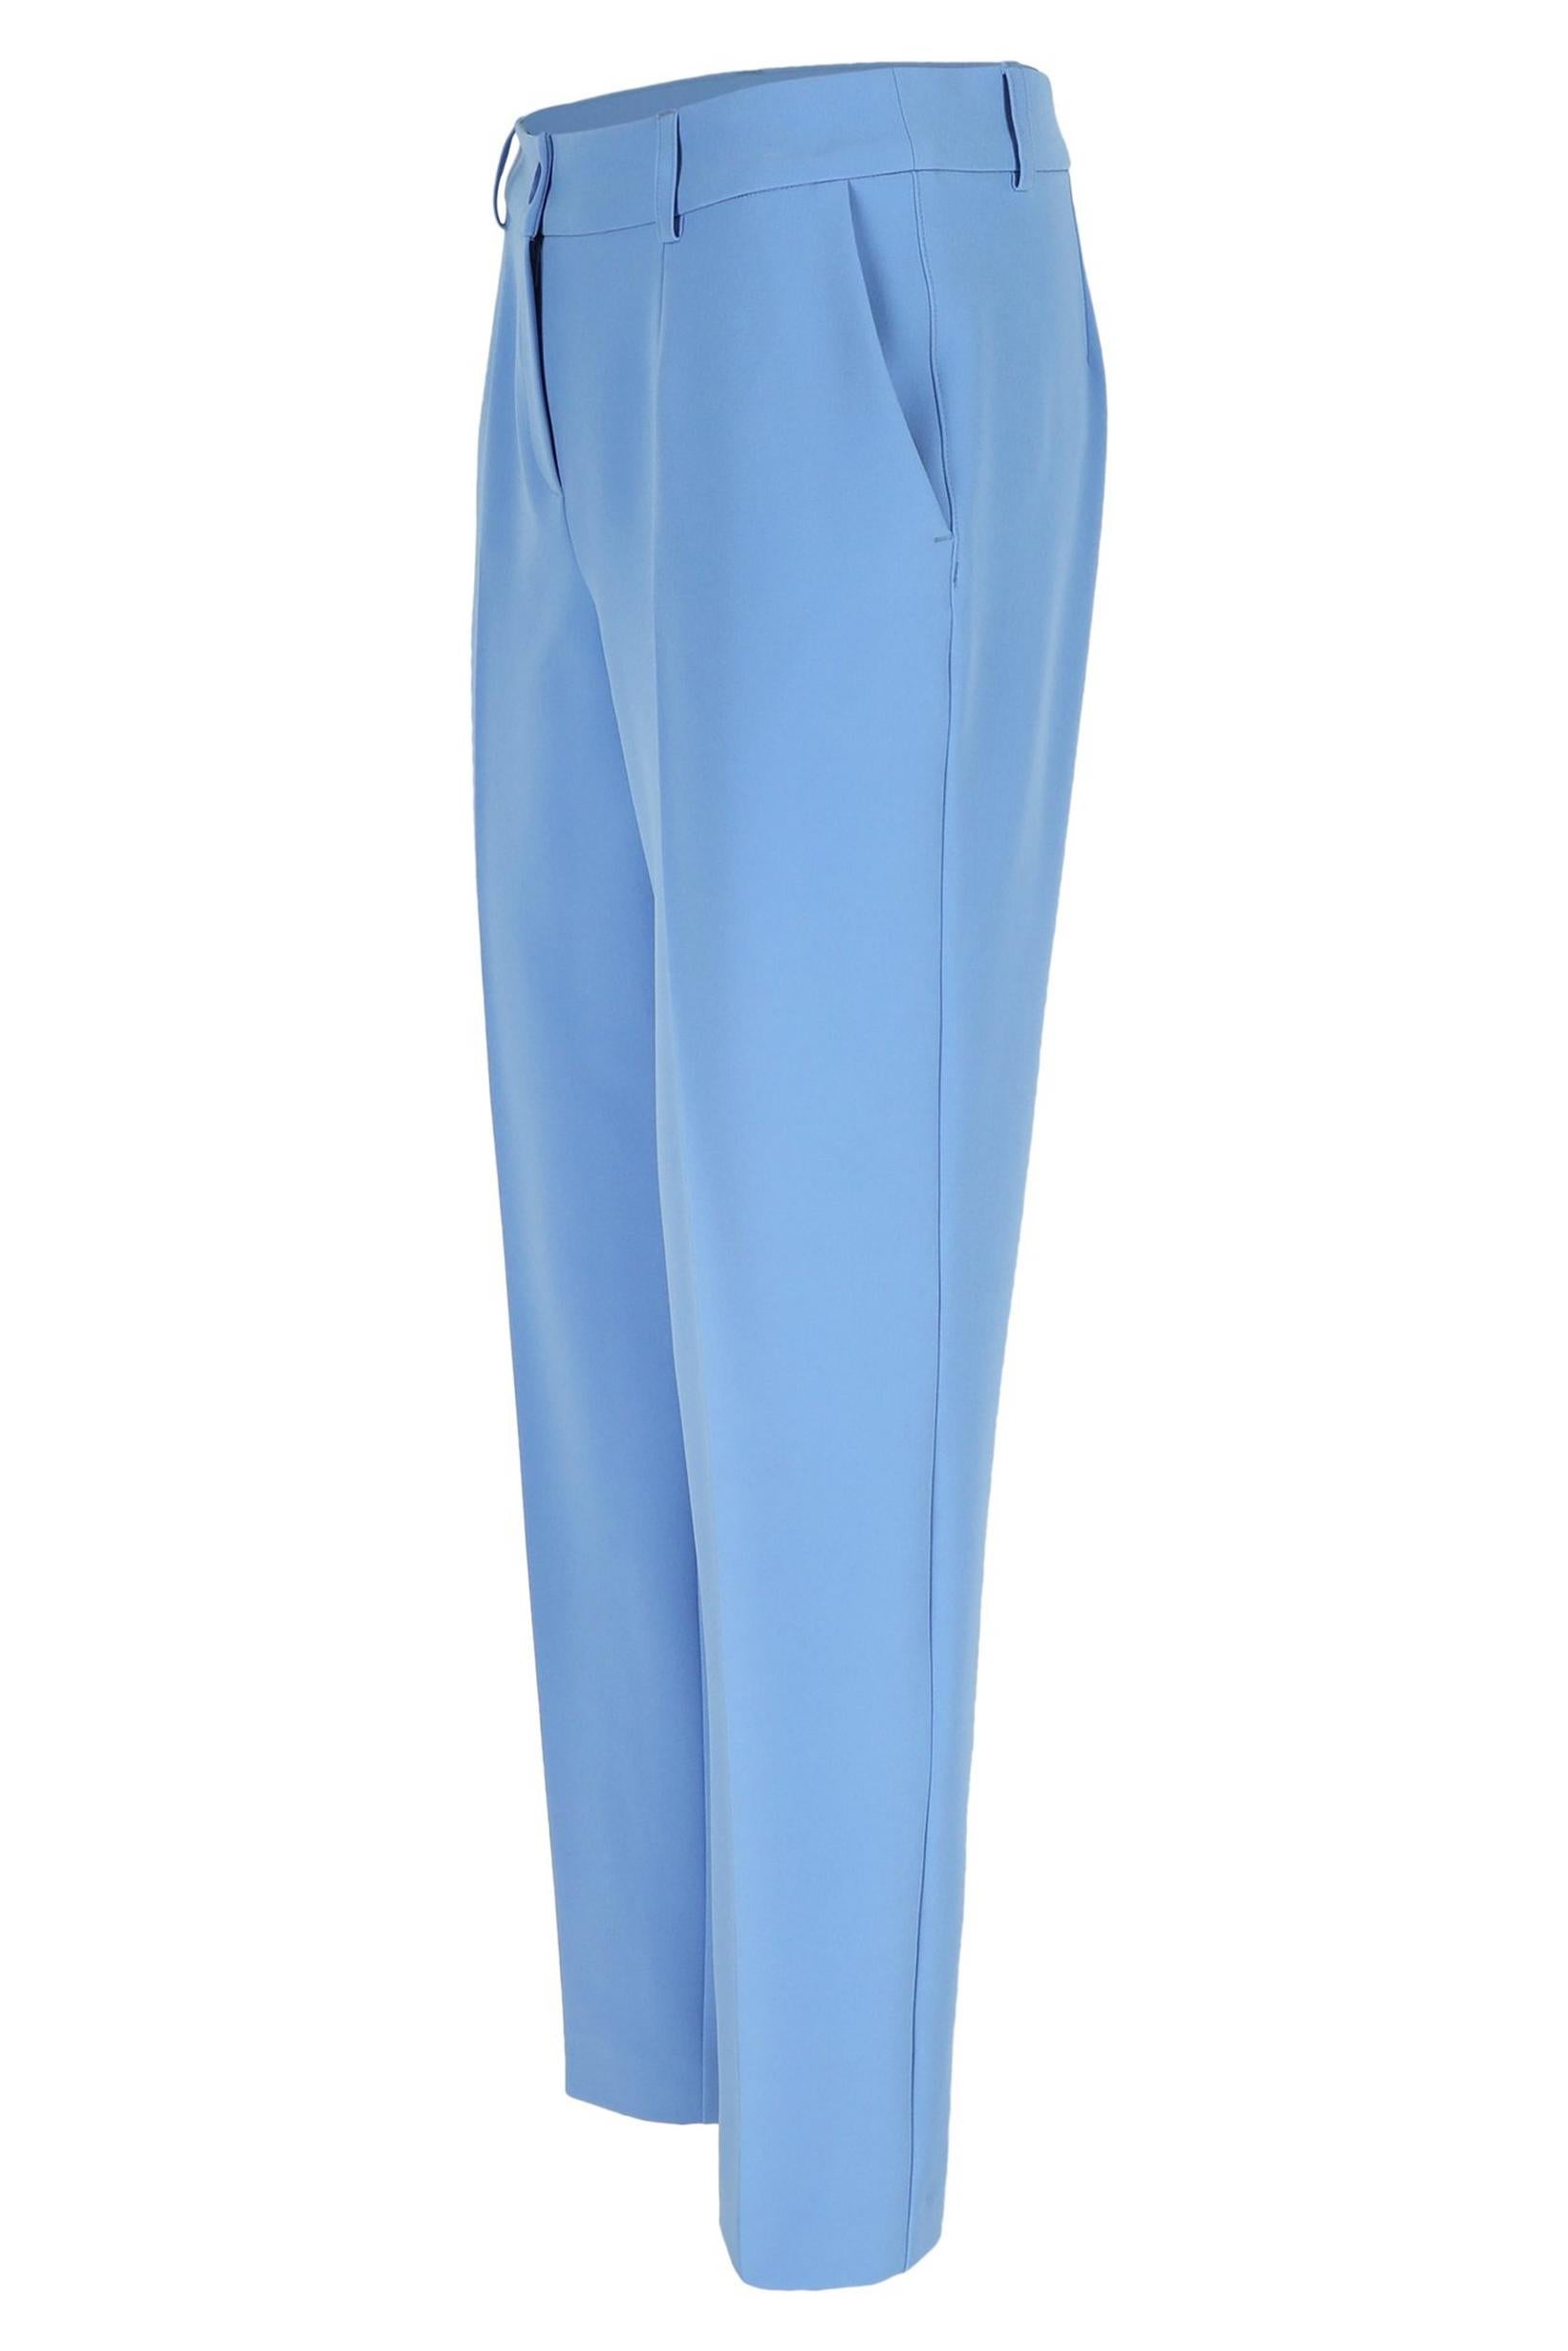 Pantalon Mayerline bleu pâle (Cate 1059/534)